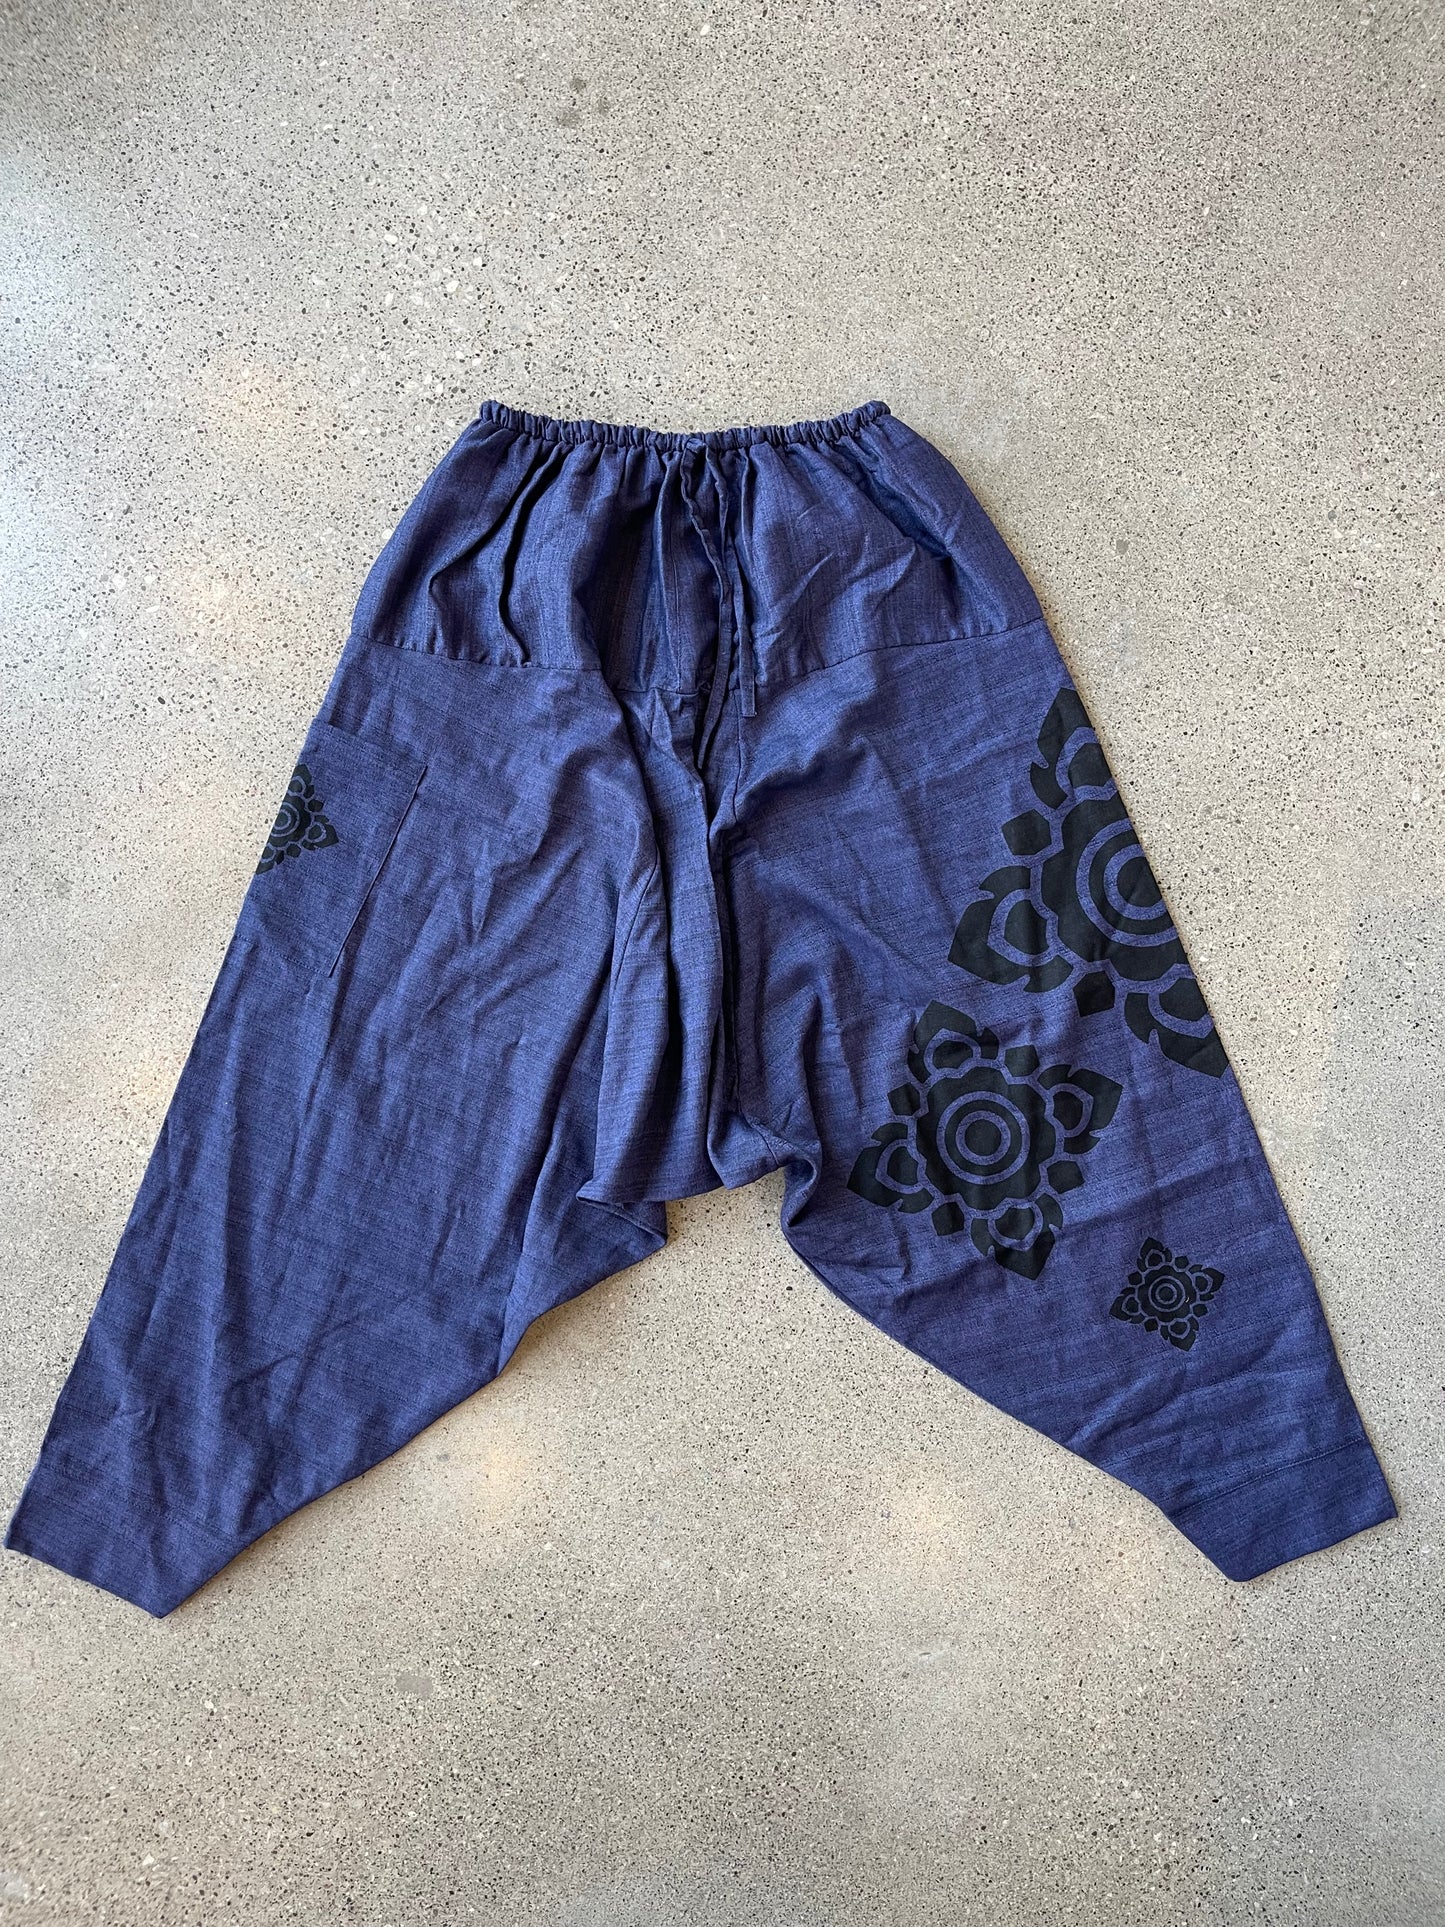 Navy Blue Geometric Patterned Thai Harem Pants